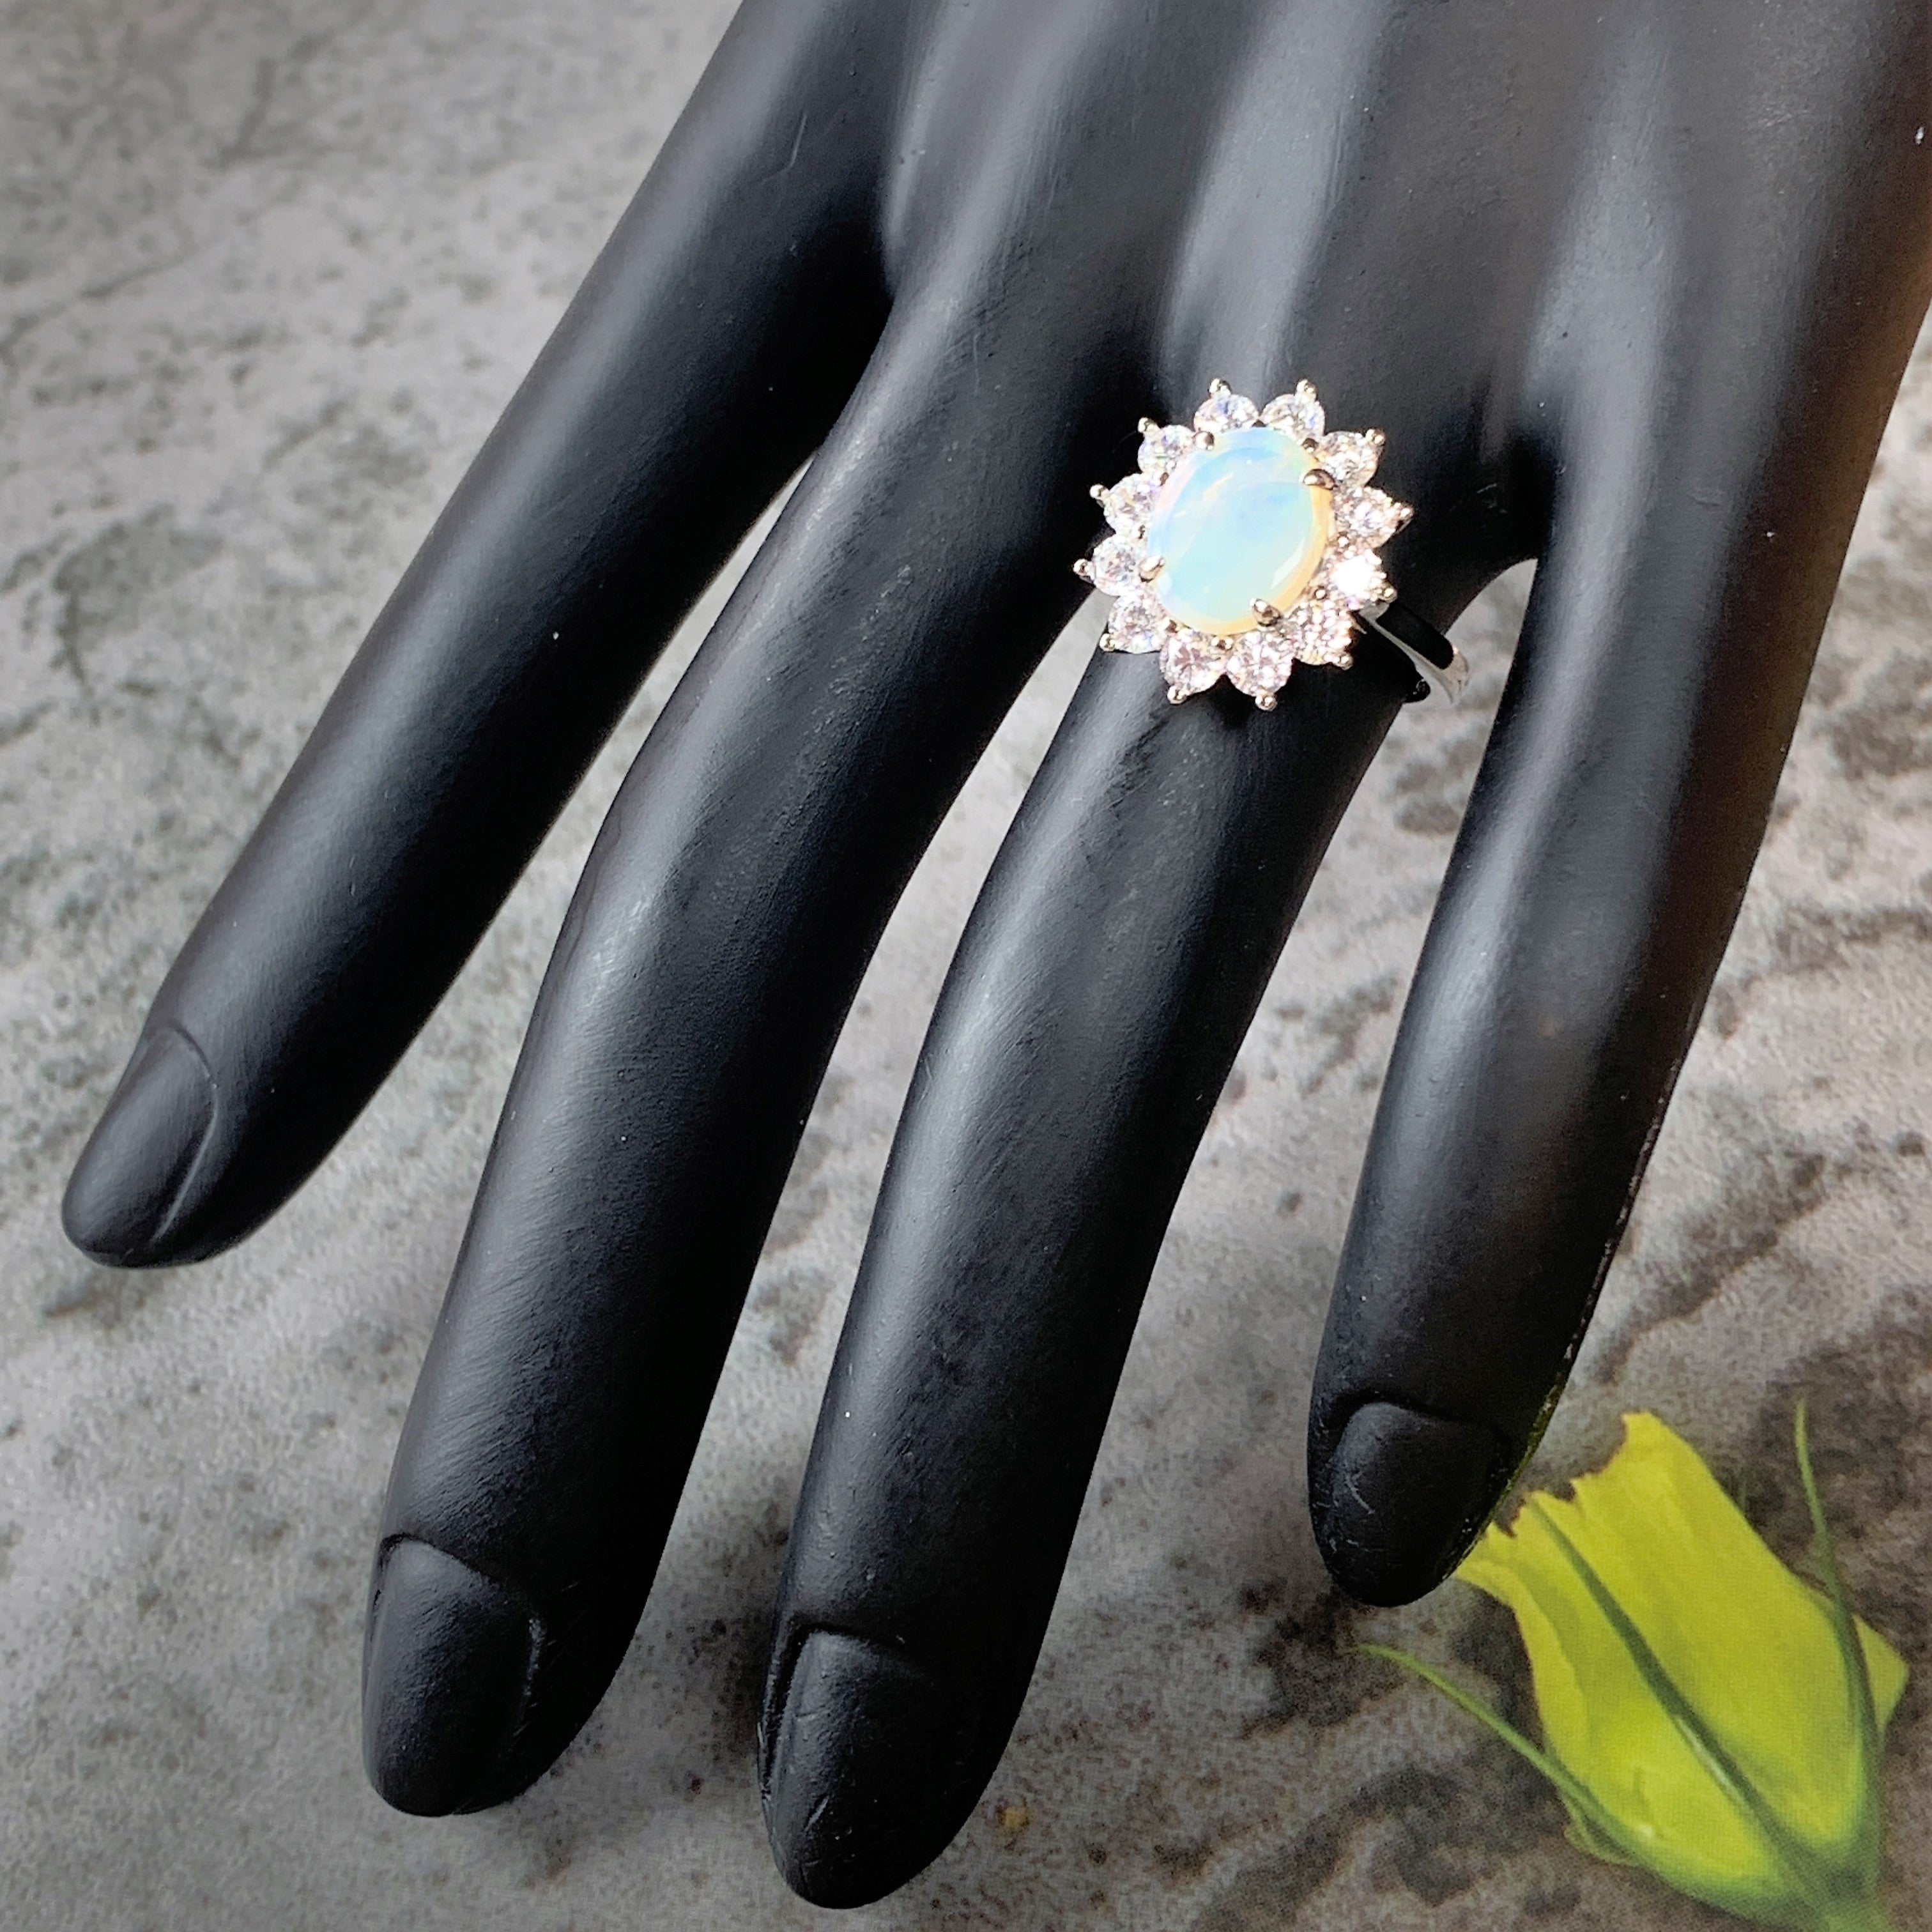 Sterling Silver 10x8mm White Opal cluster ring - Masterpiece Jewellery Opal & Gems Sydney Australia | Online Shop